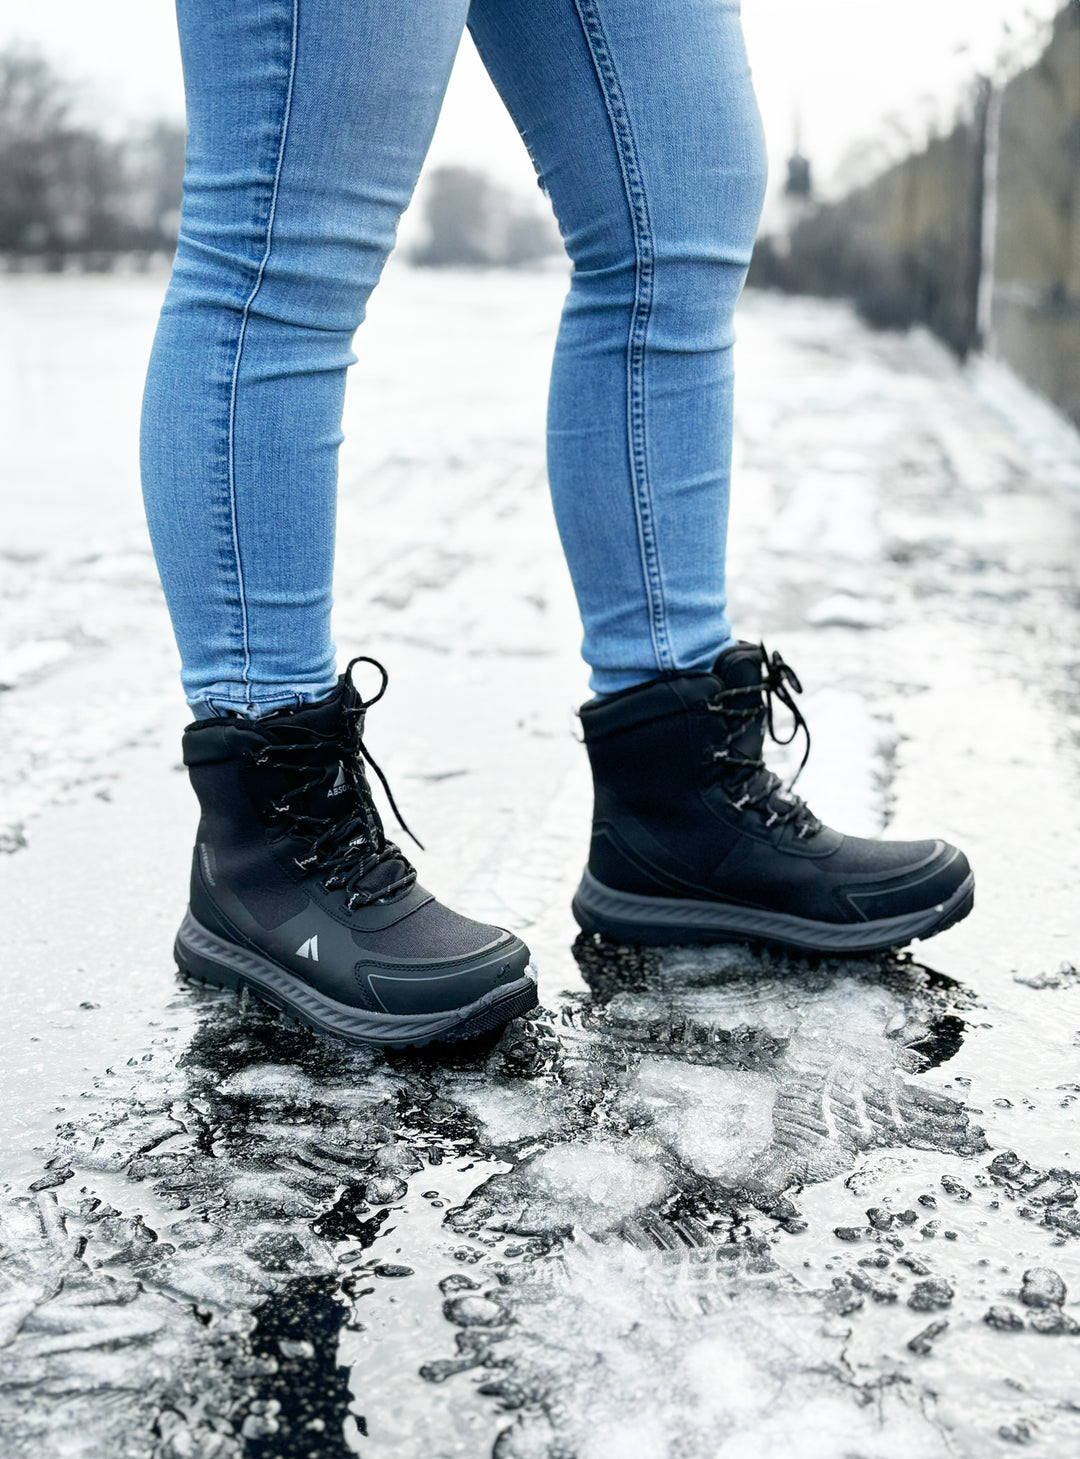 Peyton womens winter sneaker boot in slush